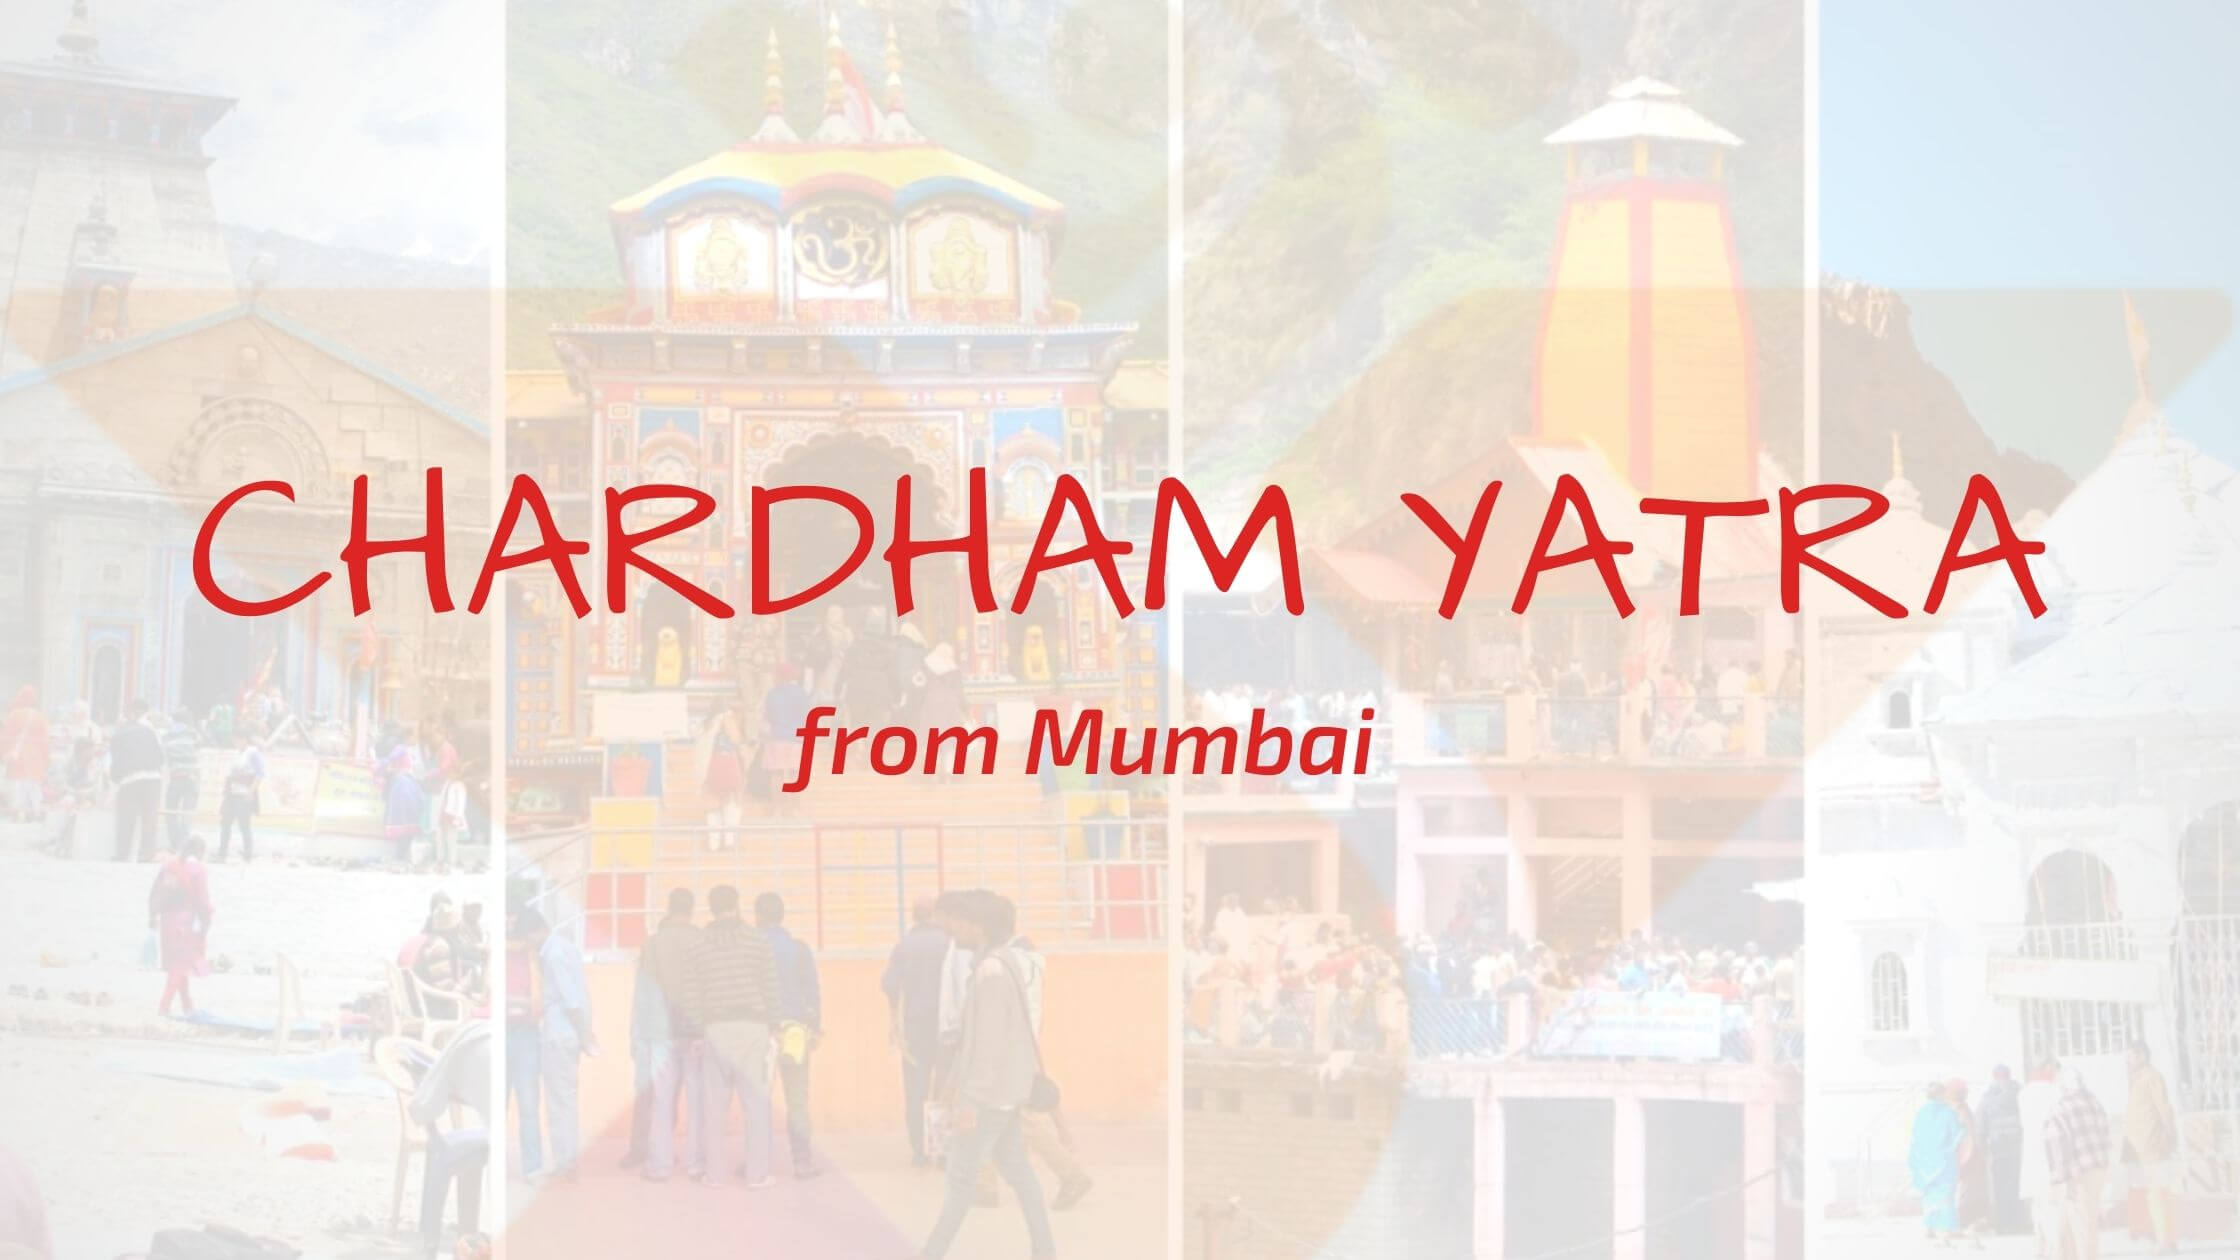 Chardham yatra from Mumbai